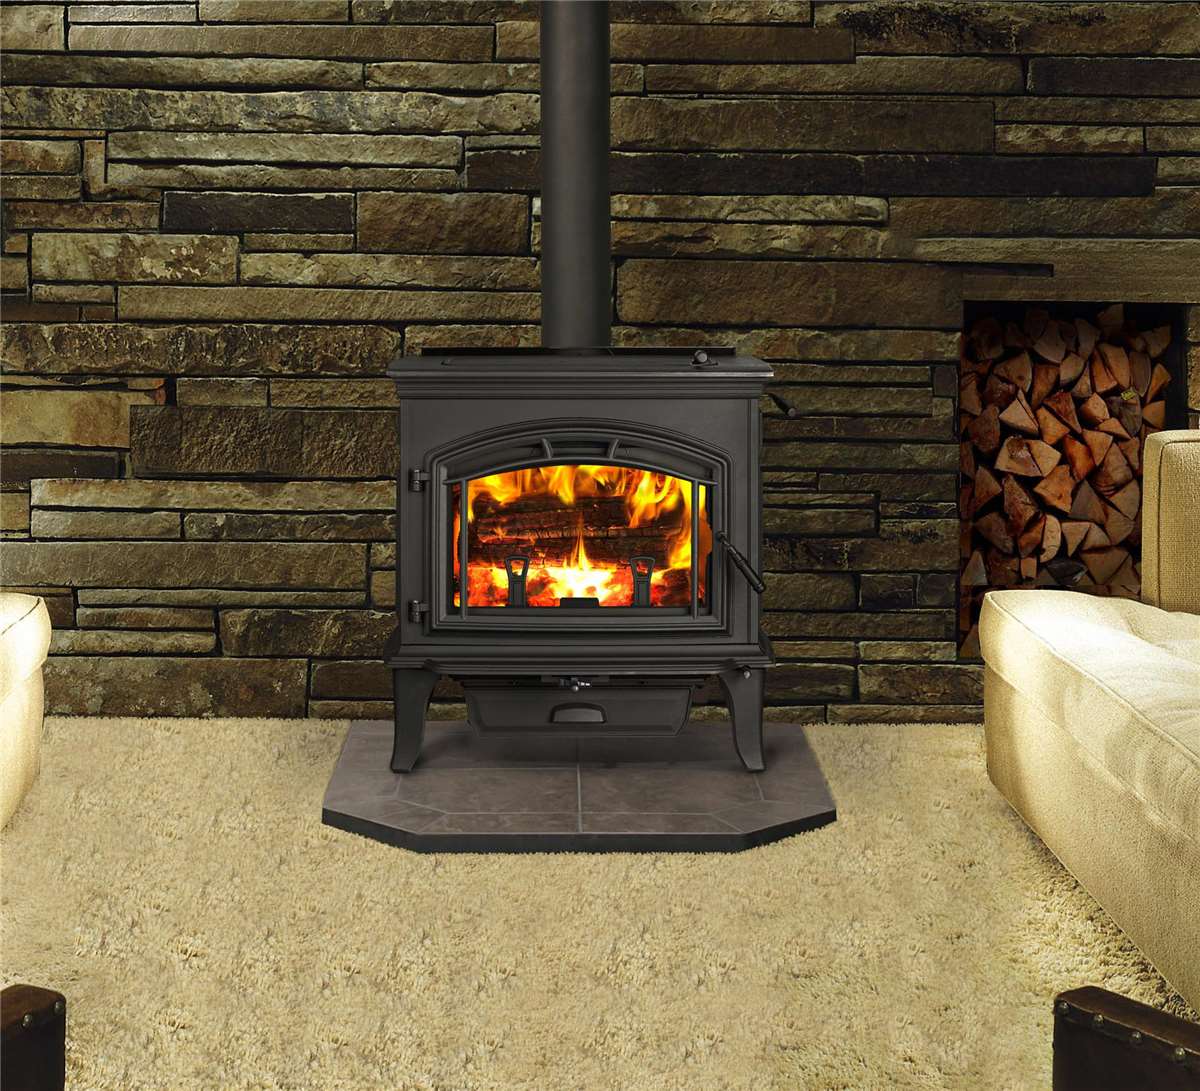 QuadraFire Explorer III wood stove shown in black.